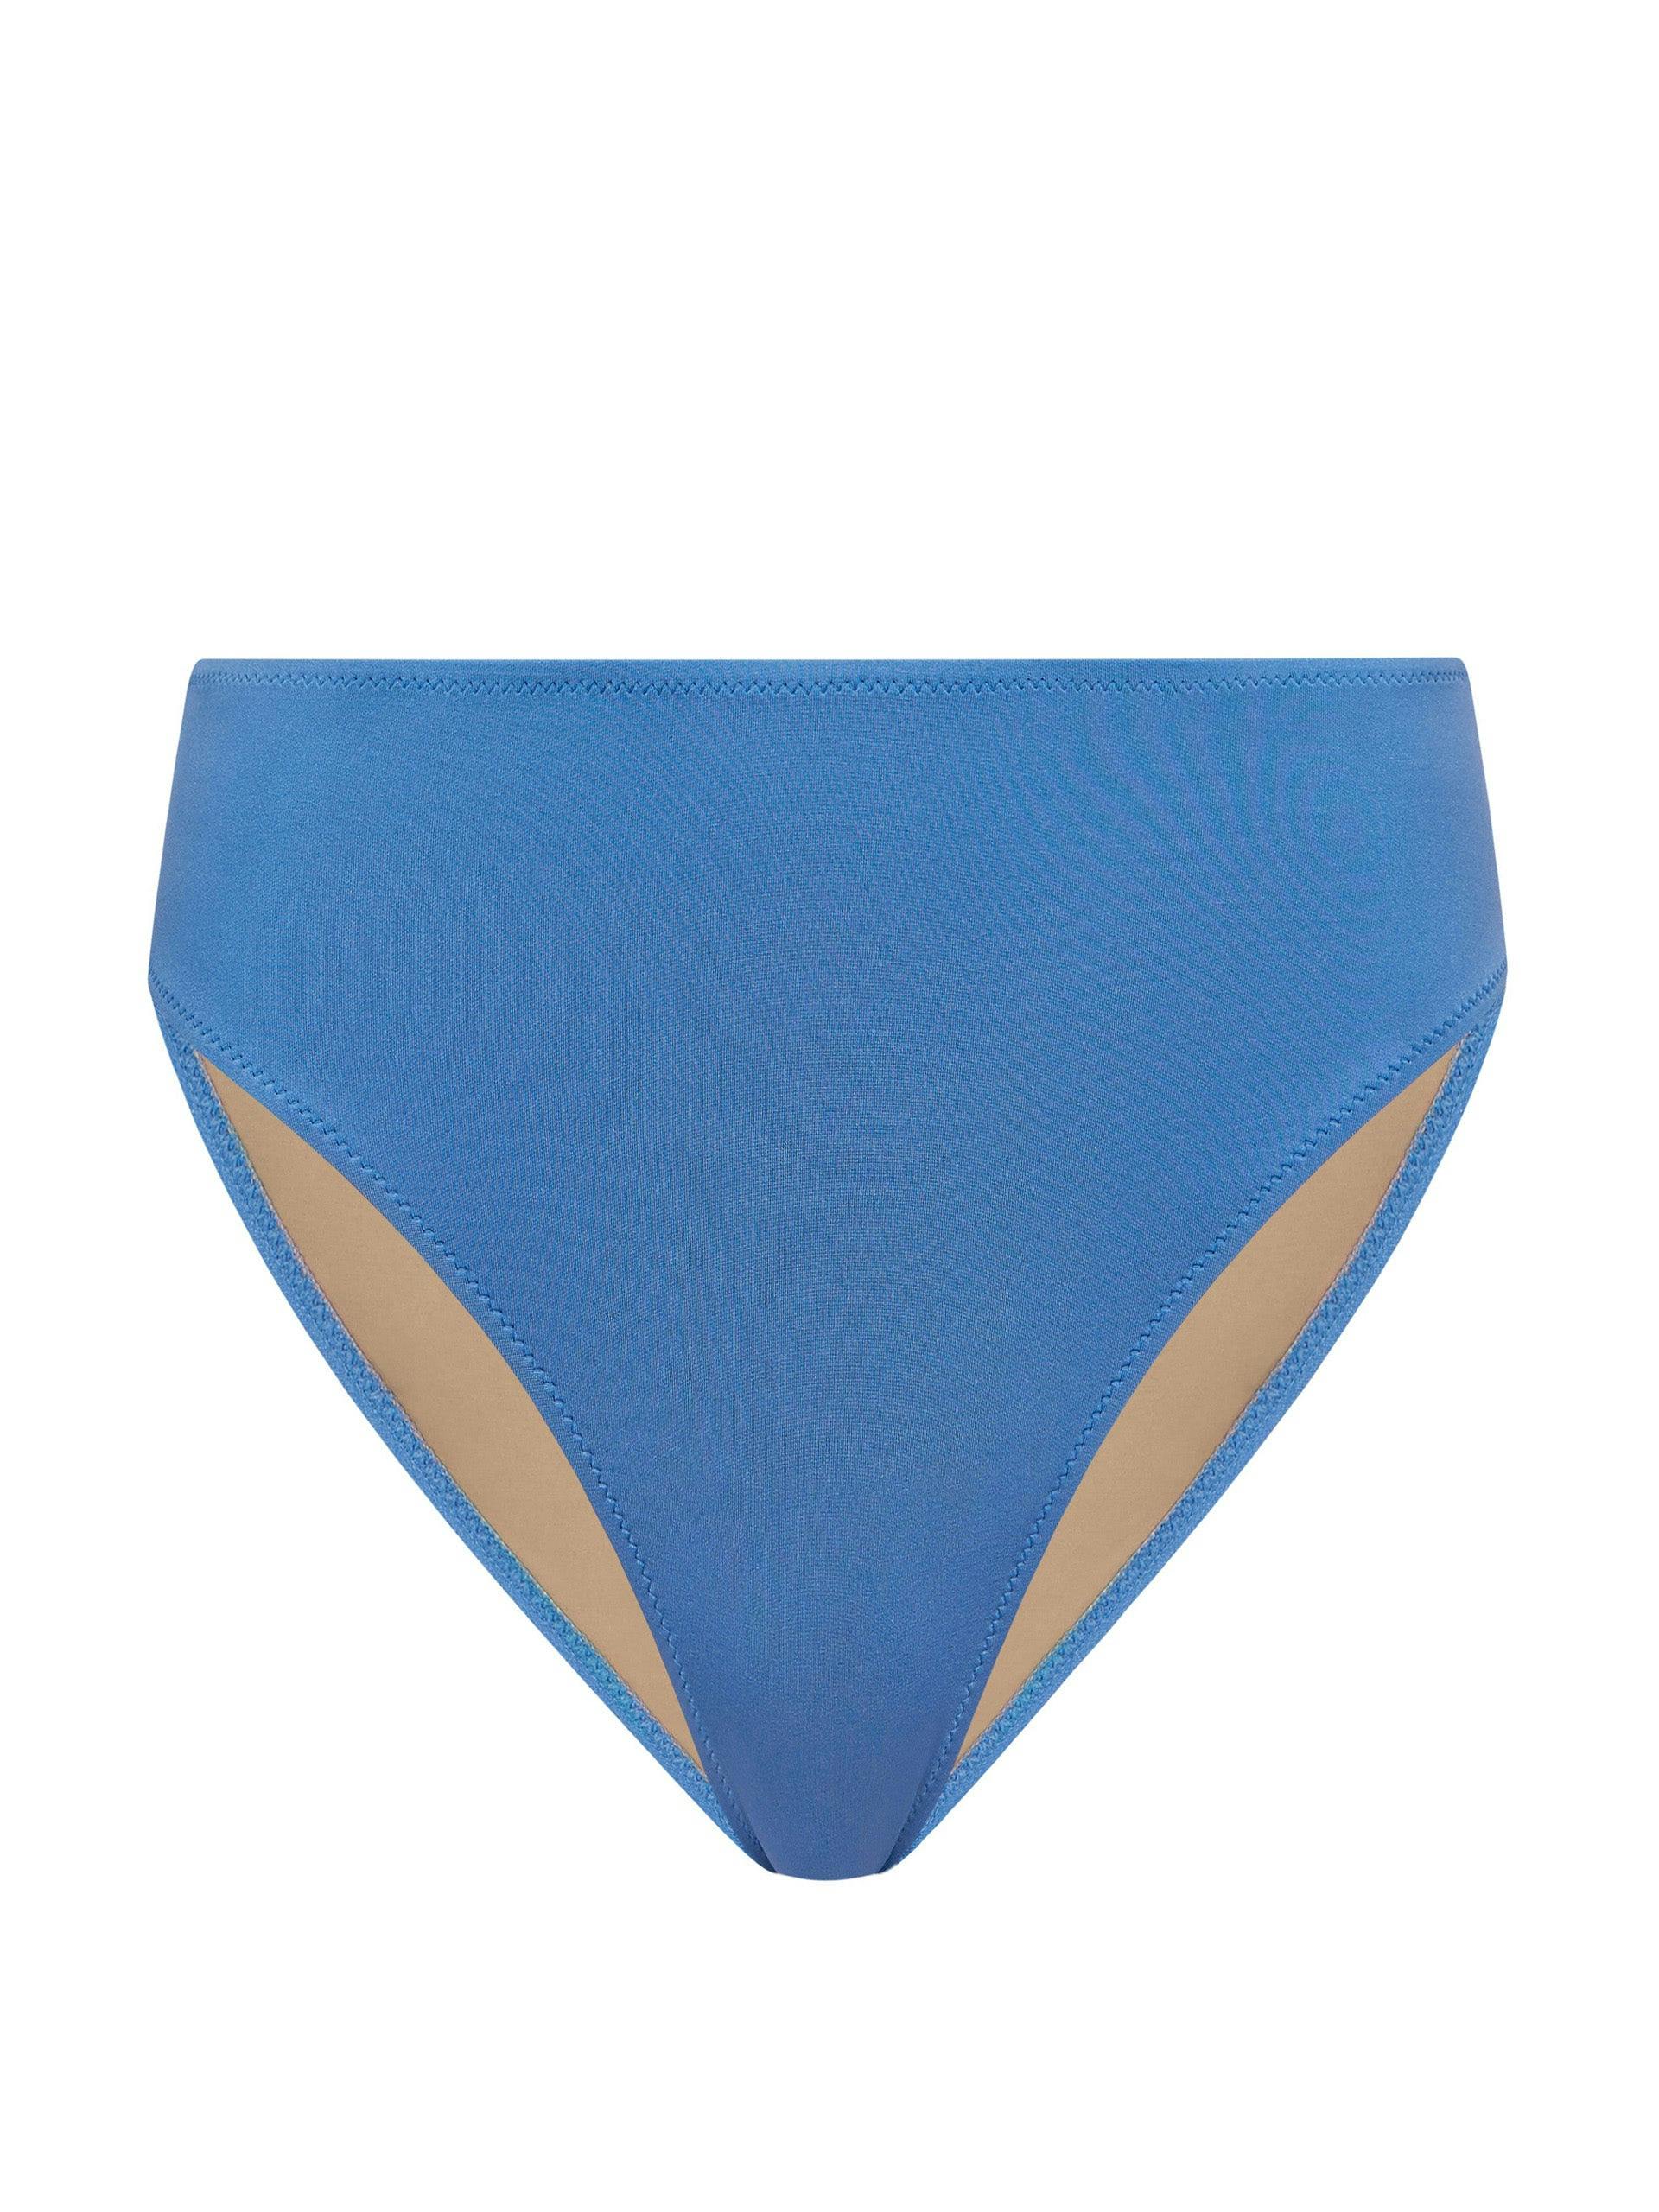 Marine blue Iza bikini bottom